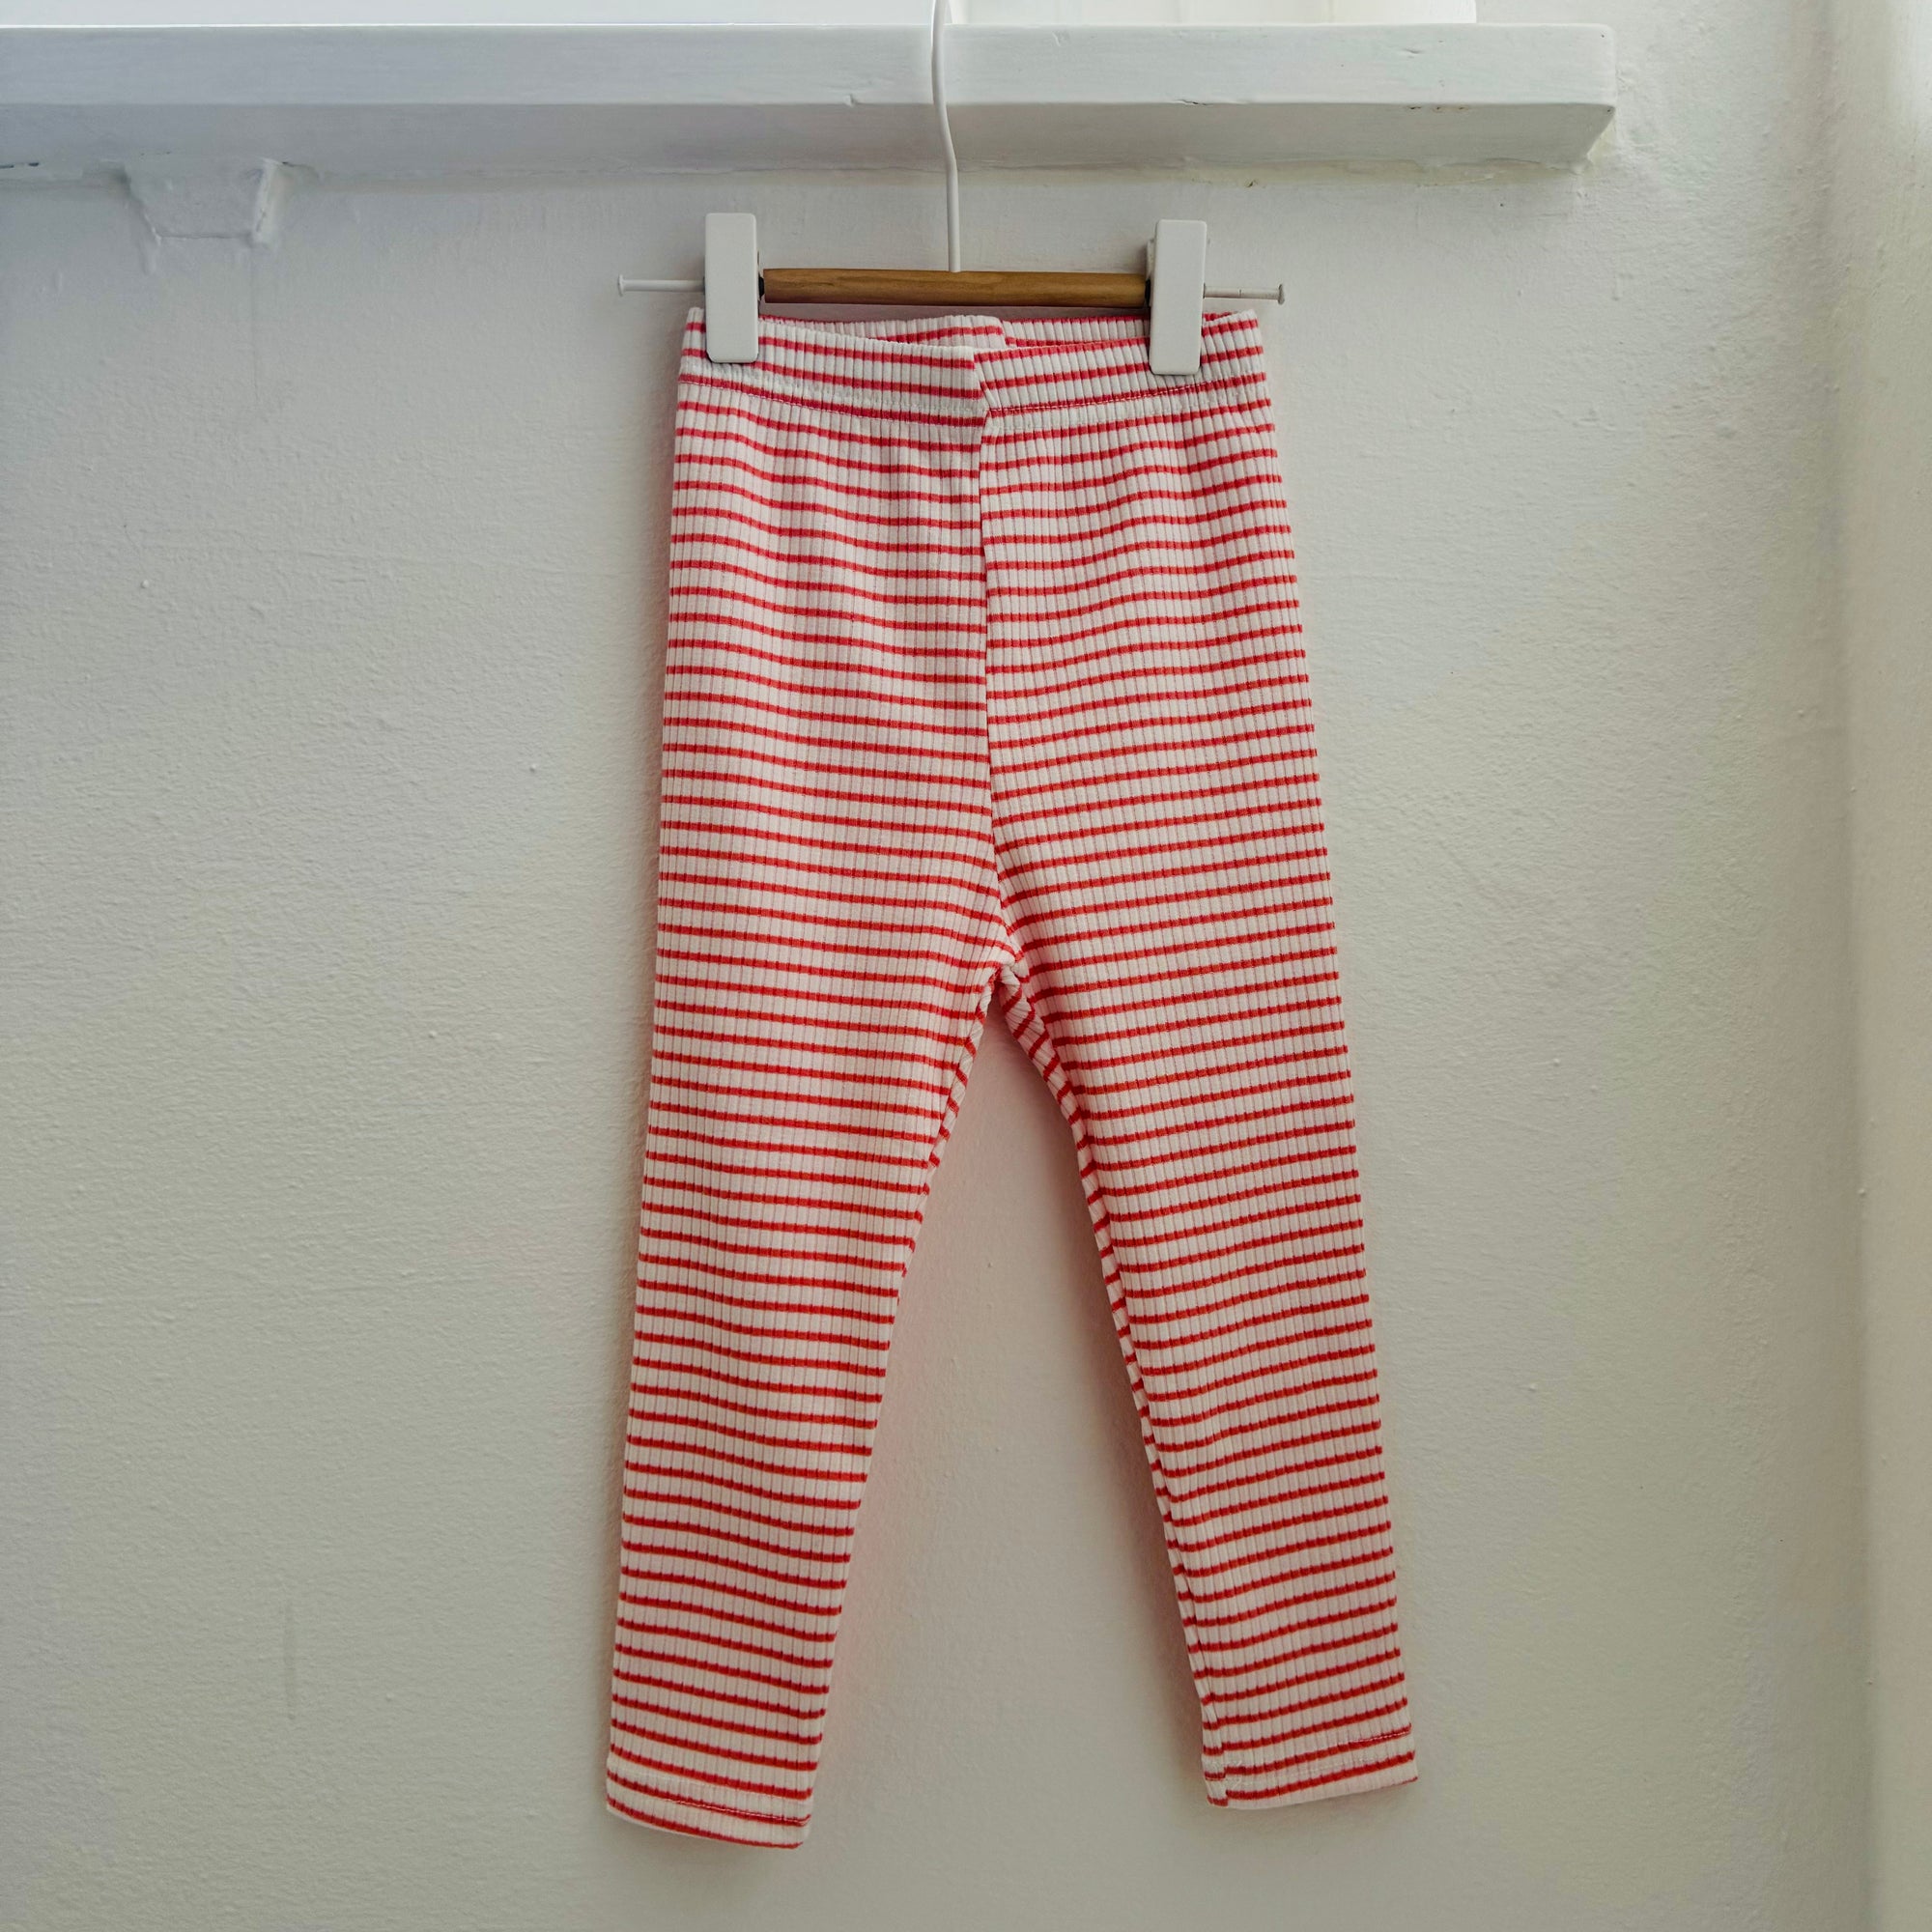 Orange Rib Stripe Leggings find Stylish Fashion for Little People- at Little Foxx Concept Store